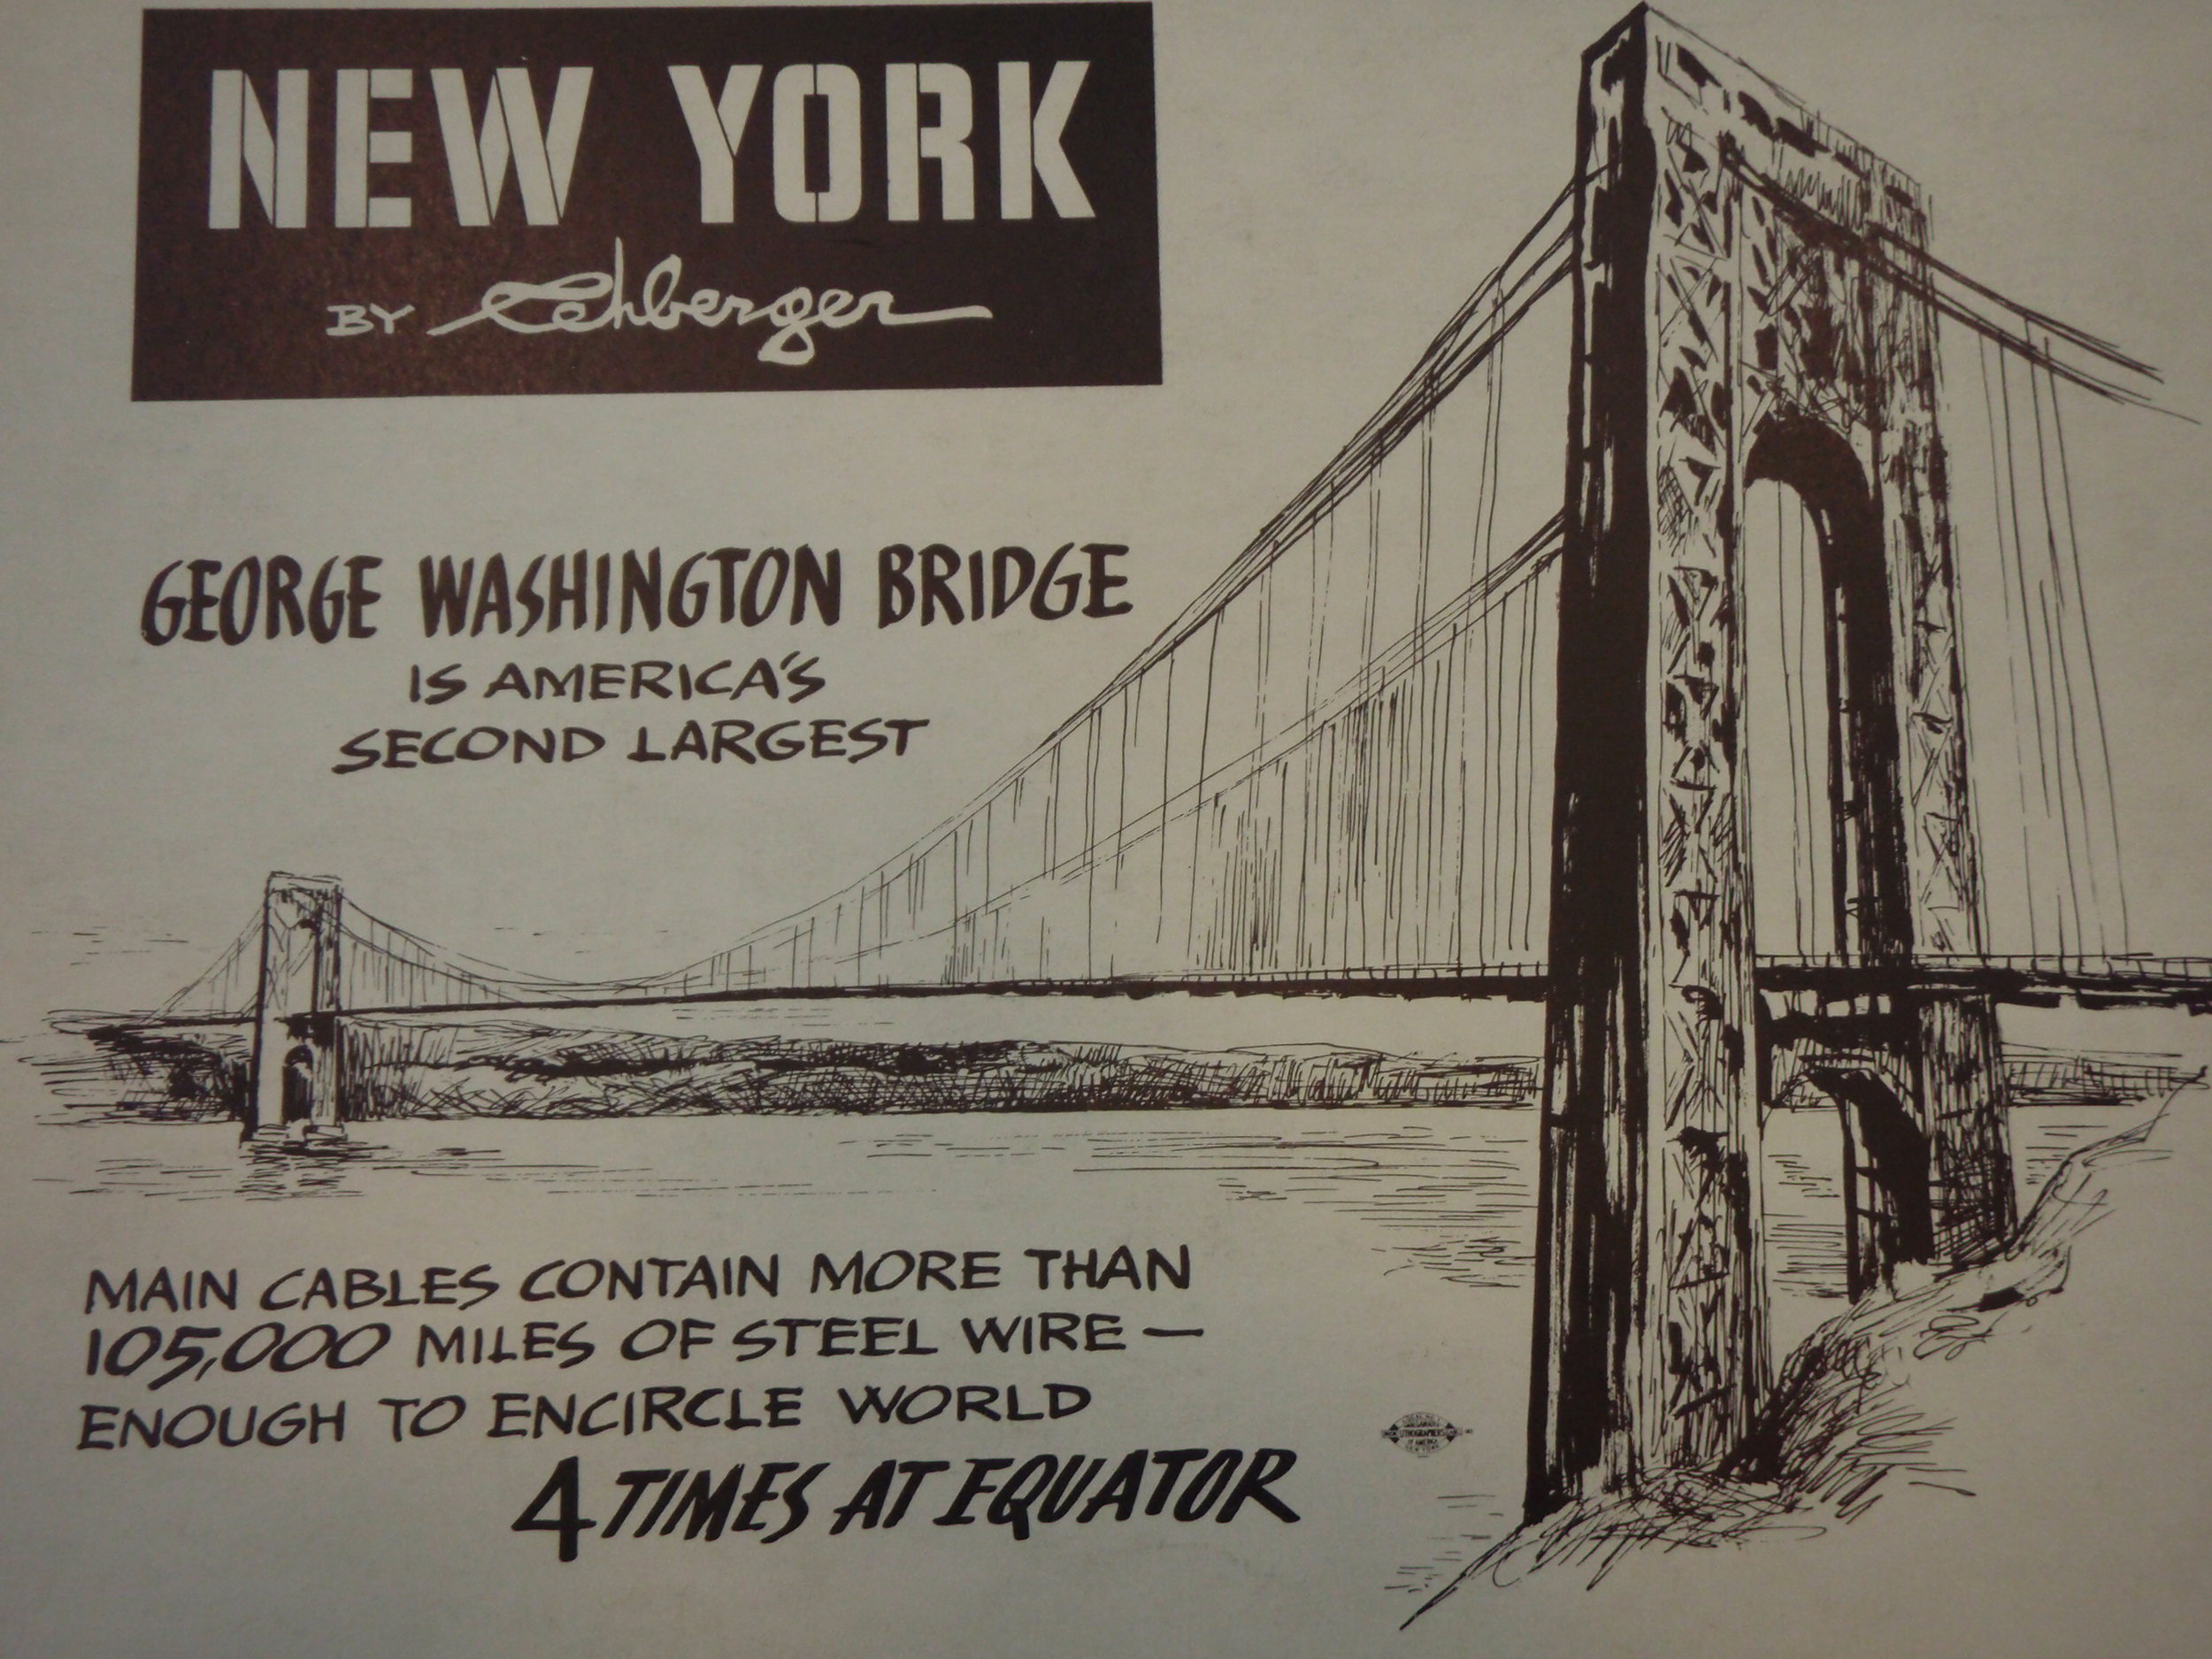 NEW YORK by REHBERGER  1948 #1  Subway Poster - New York Subways Advertising Co..JPG